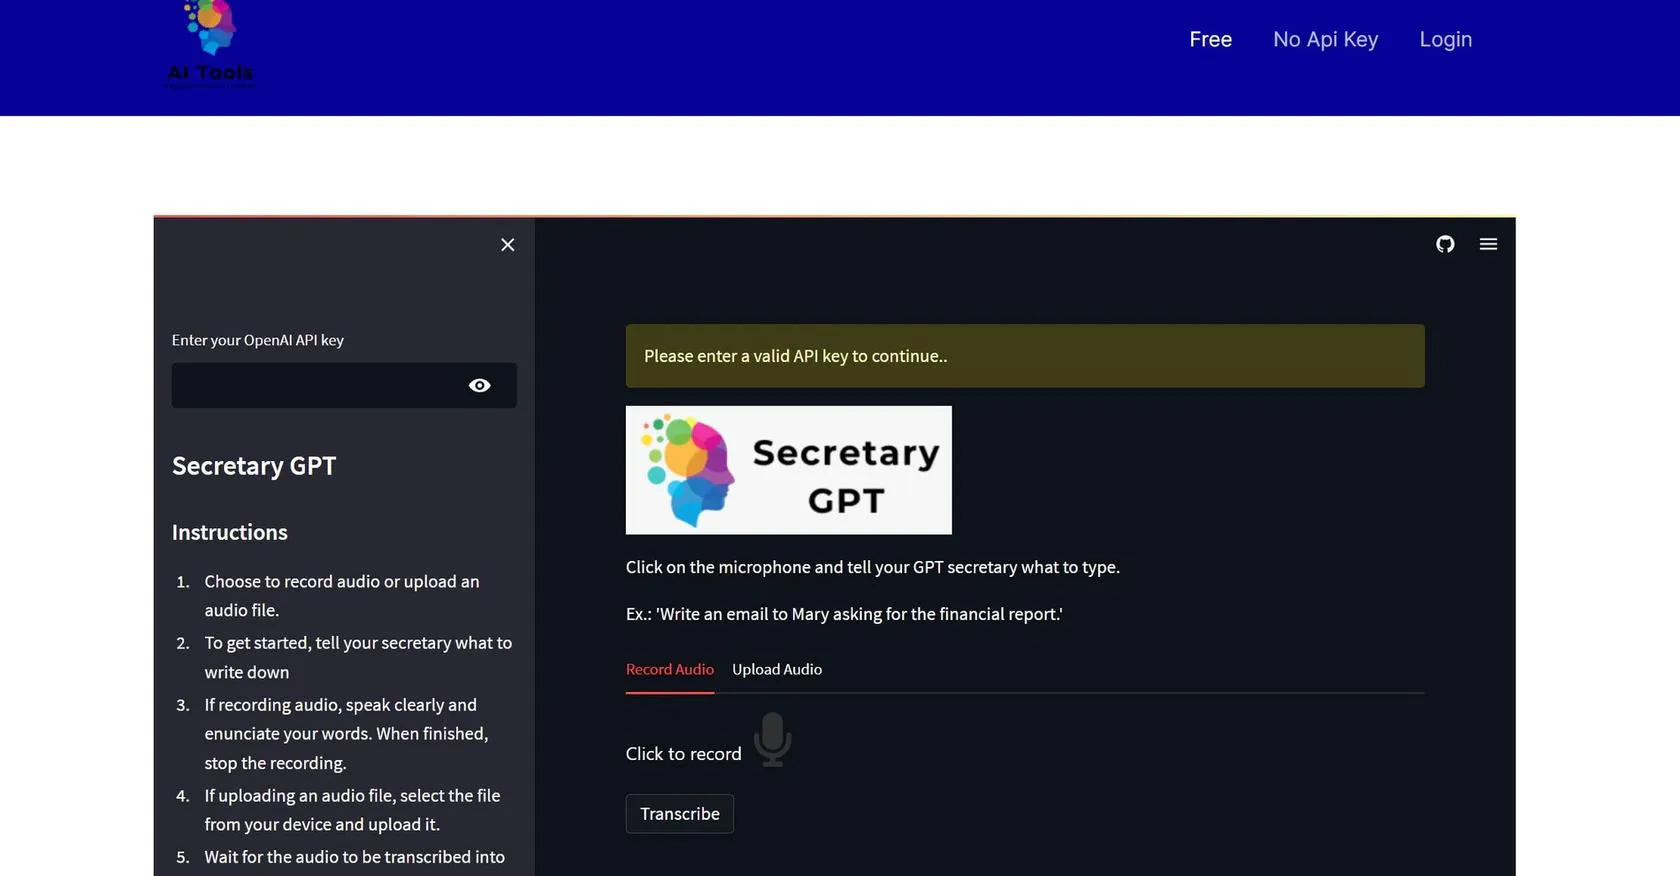 Secretary GPT